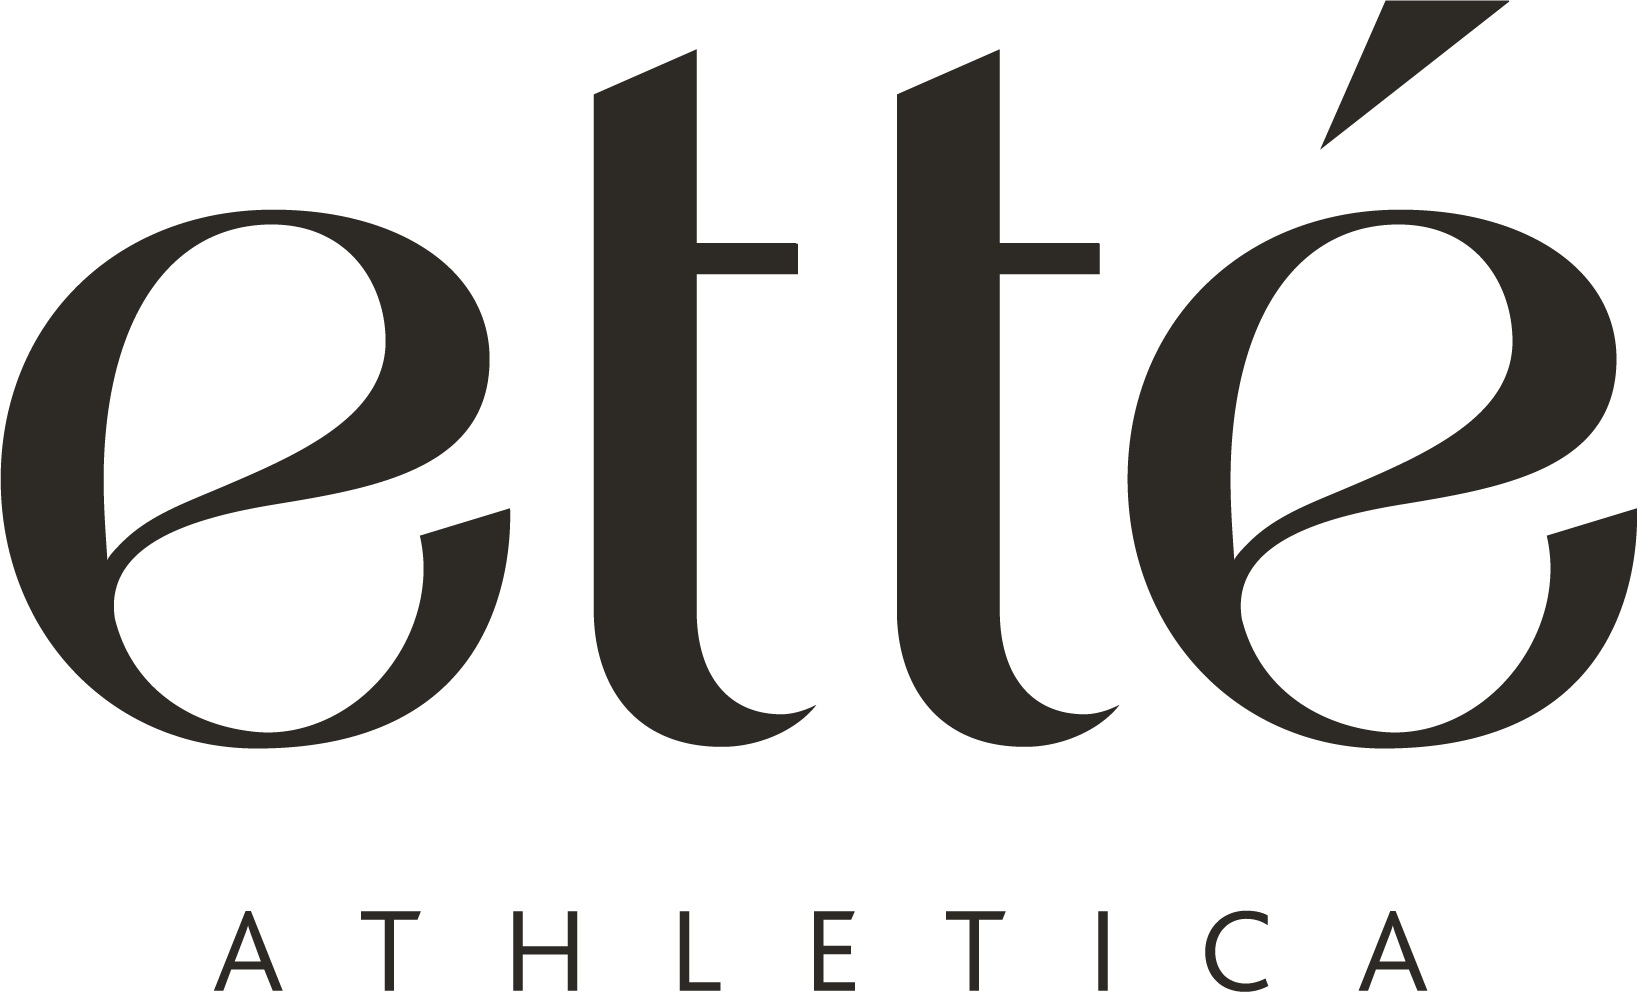 Etté Athletica